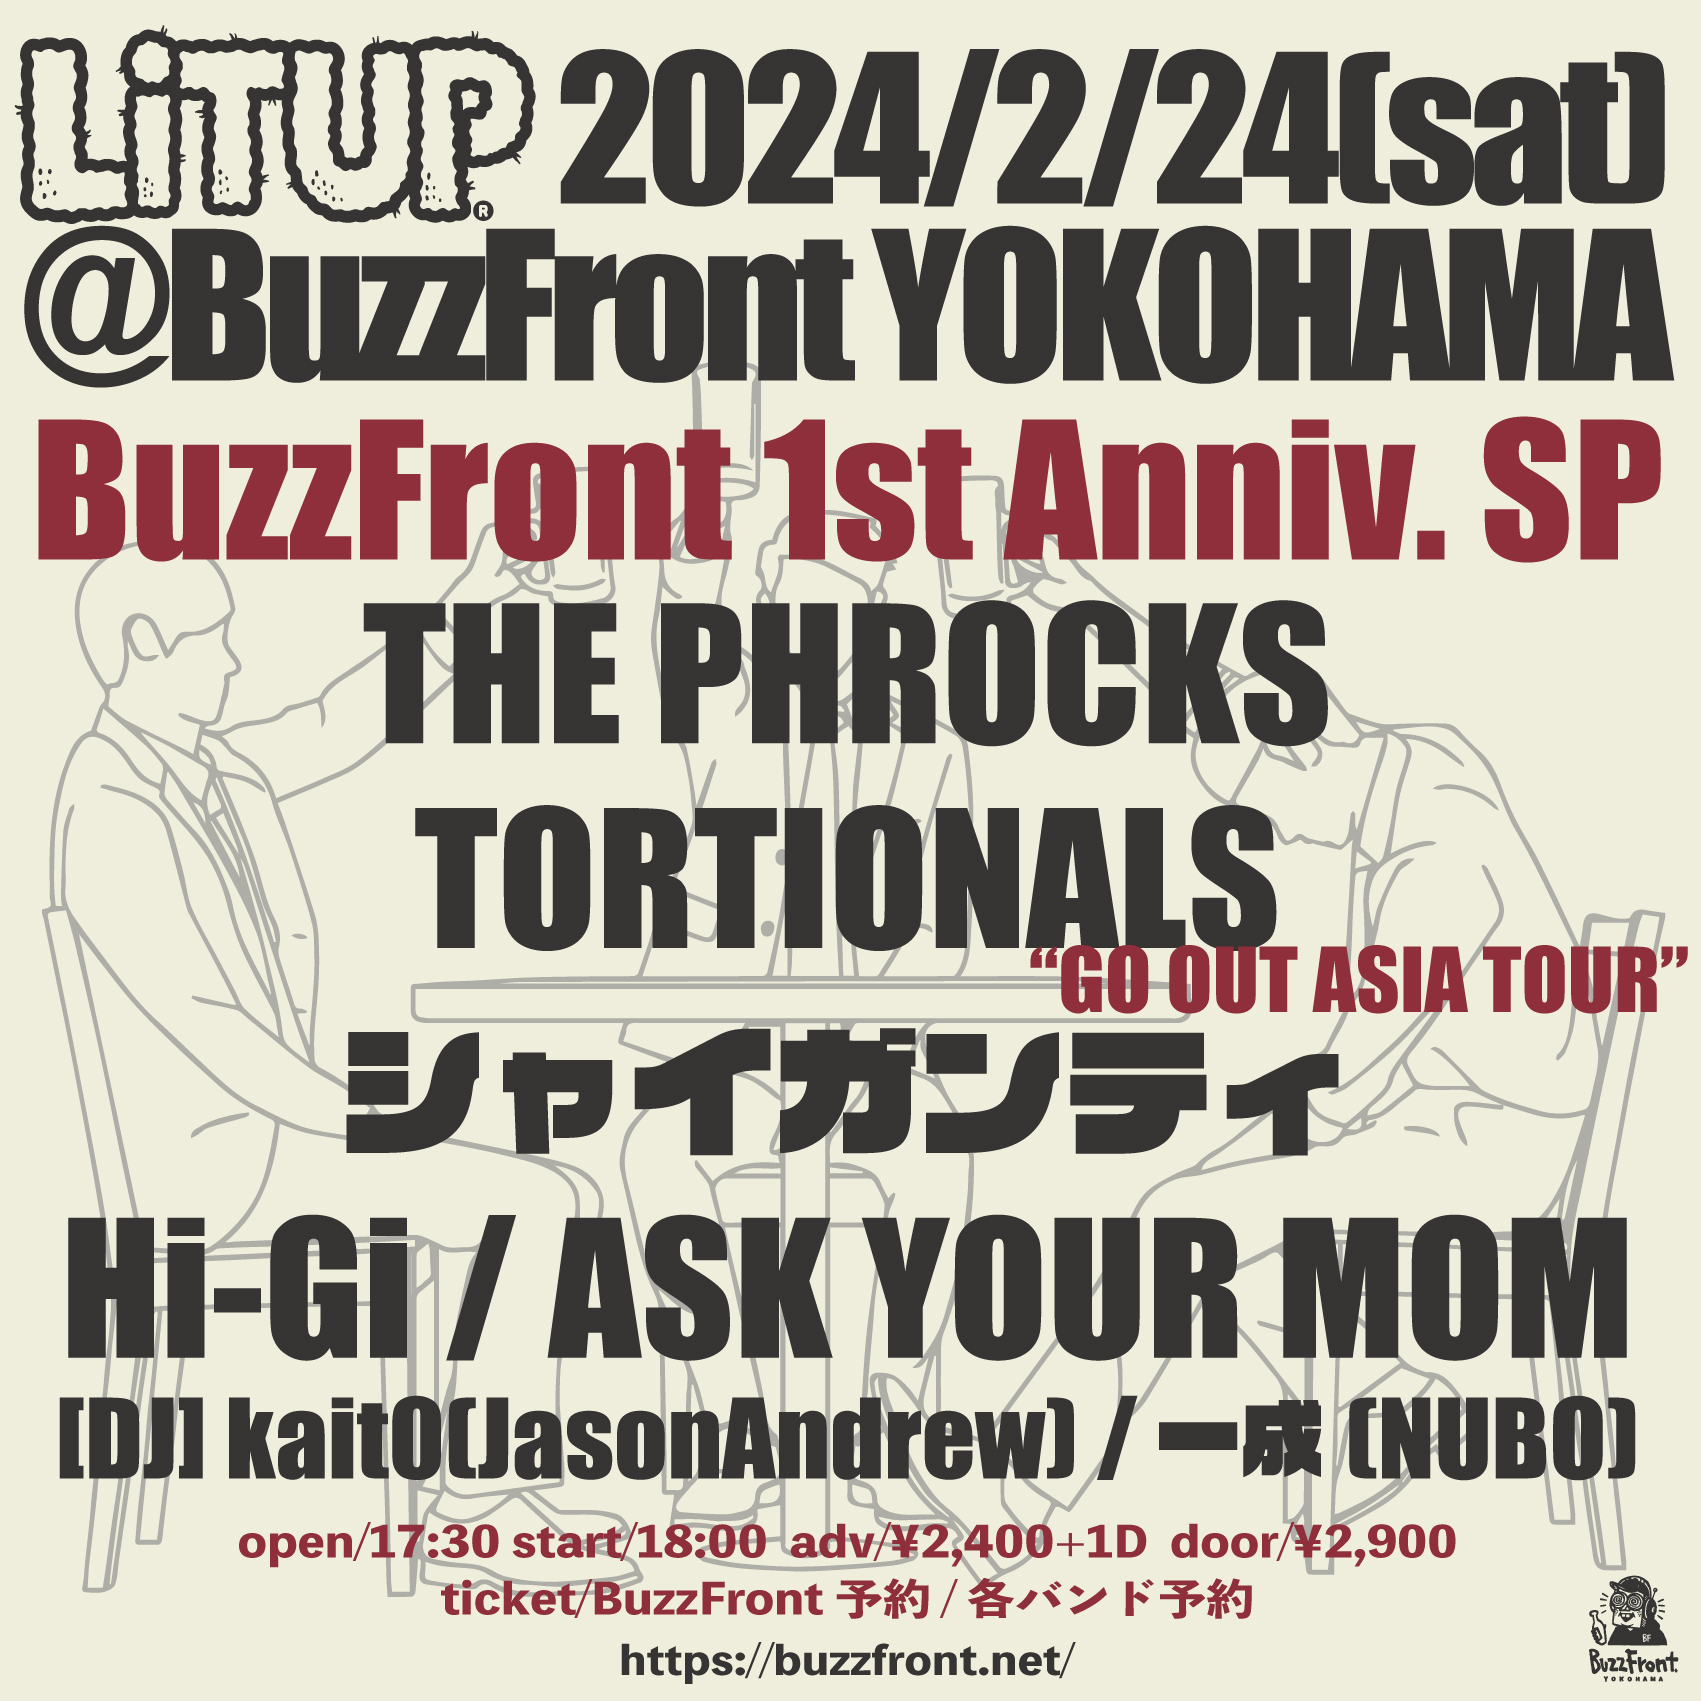 Lit up-BuzzFront 1st Anniv.SP & TORTIONALS [GO OUT ASIA TOUR]-